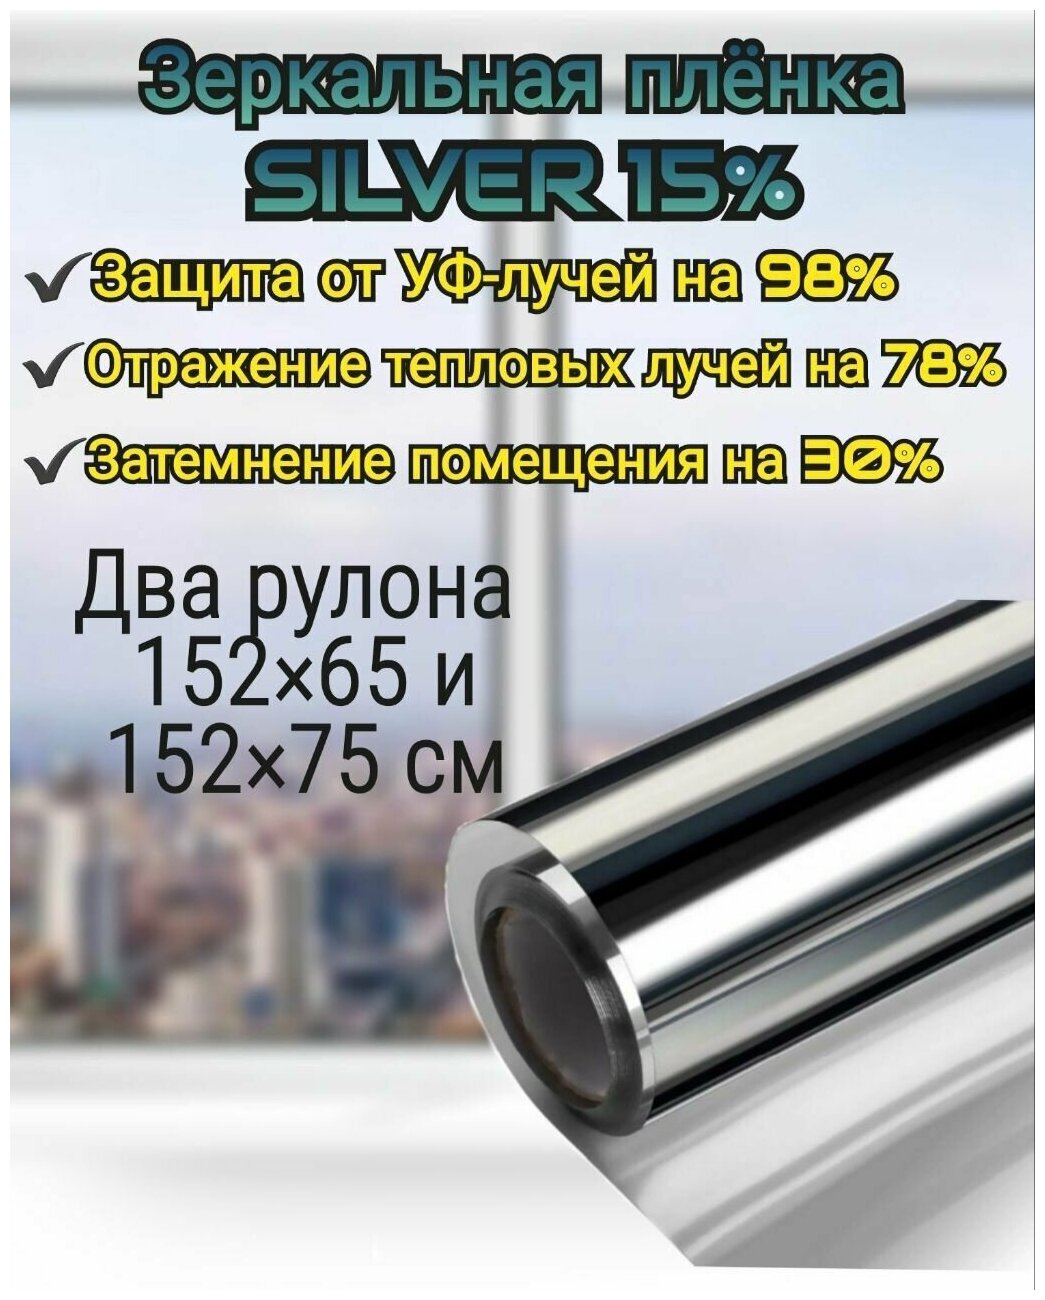 Самоклеящаяся плёнка для окон Silver 15%